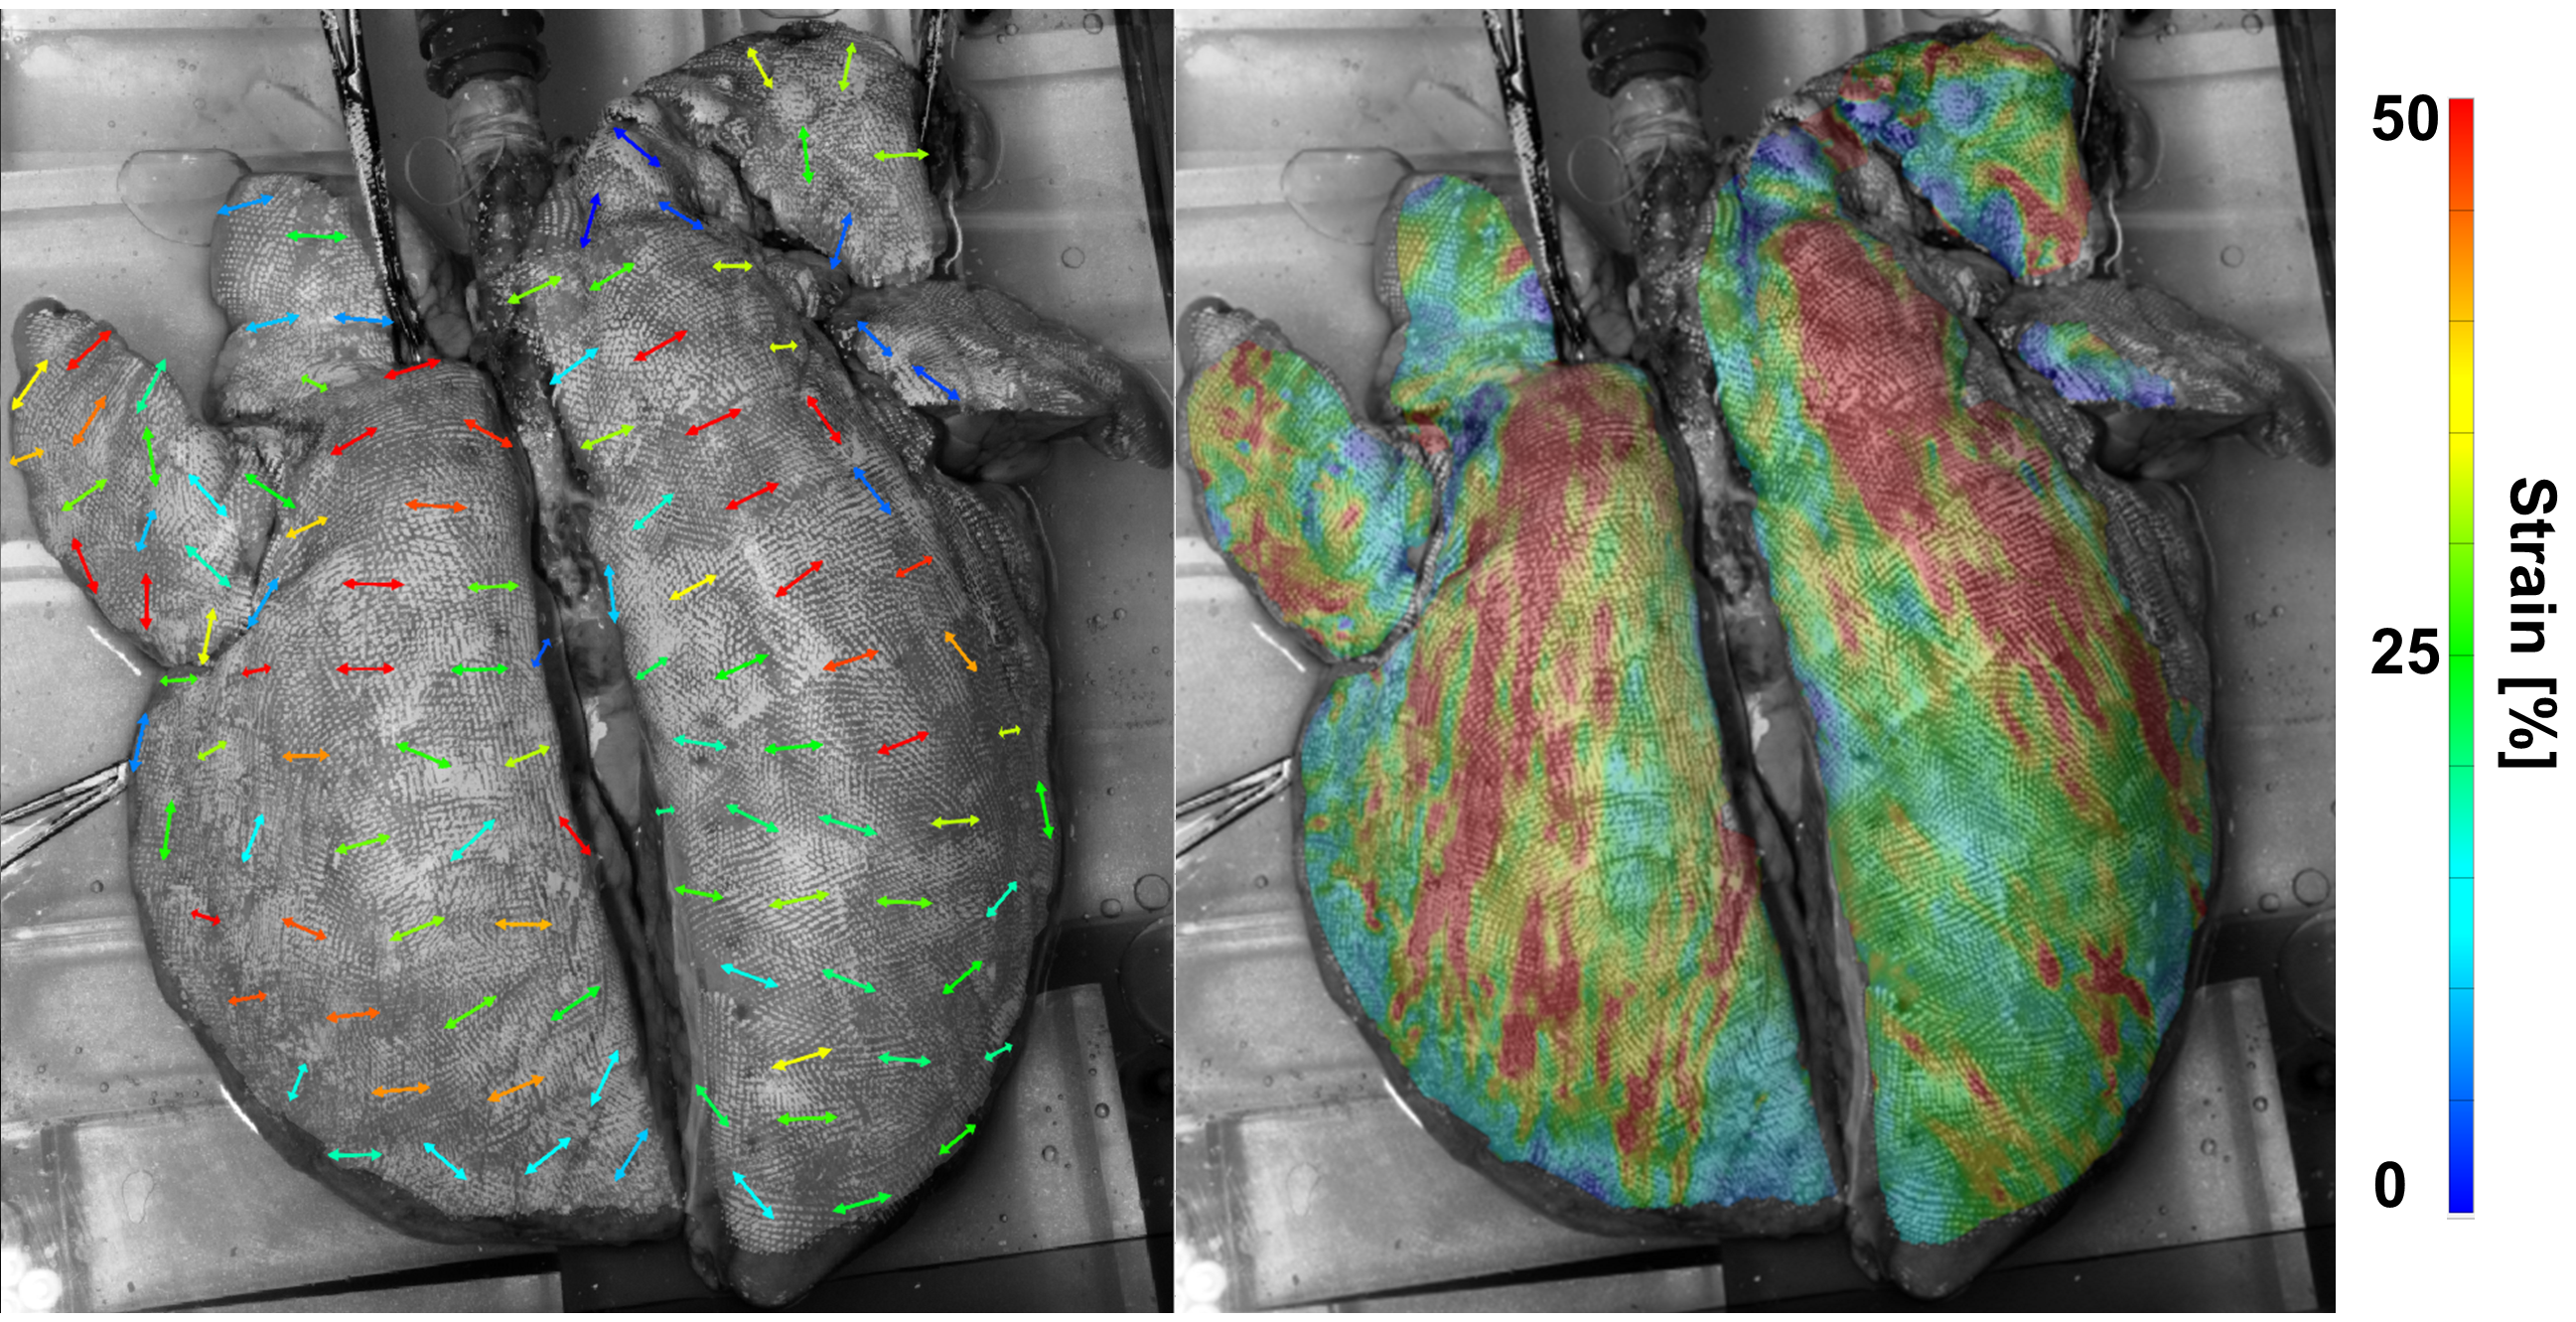  Digital image correlation techniques employed in Eskandari's lab to characterize lung mechanics.